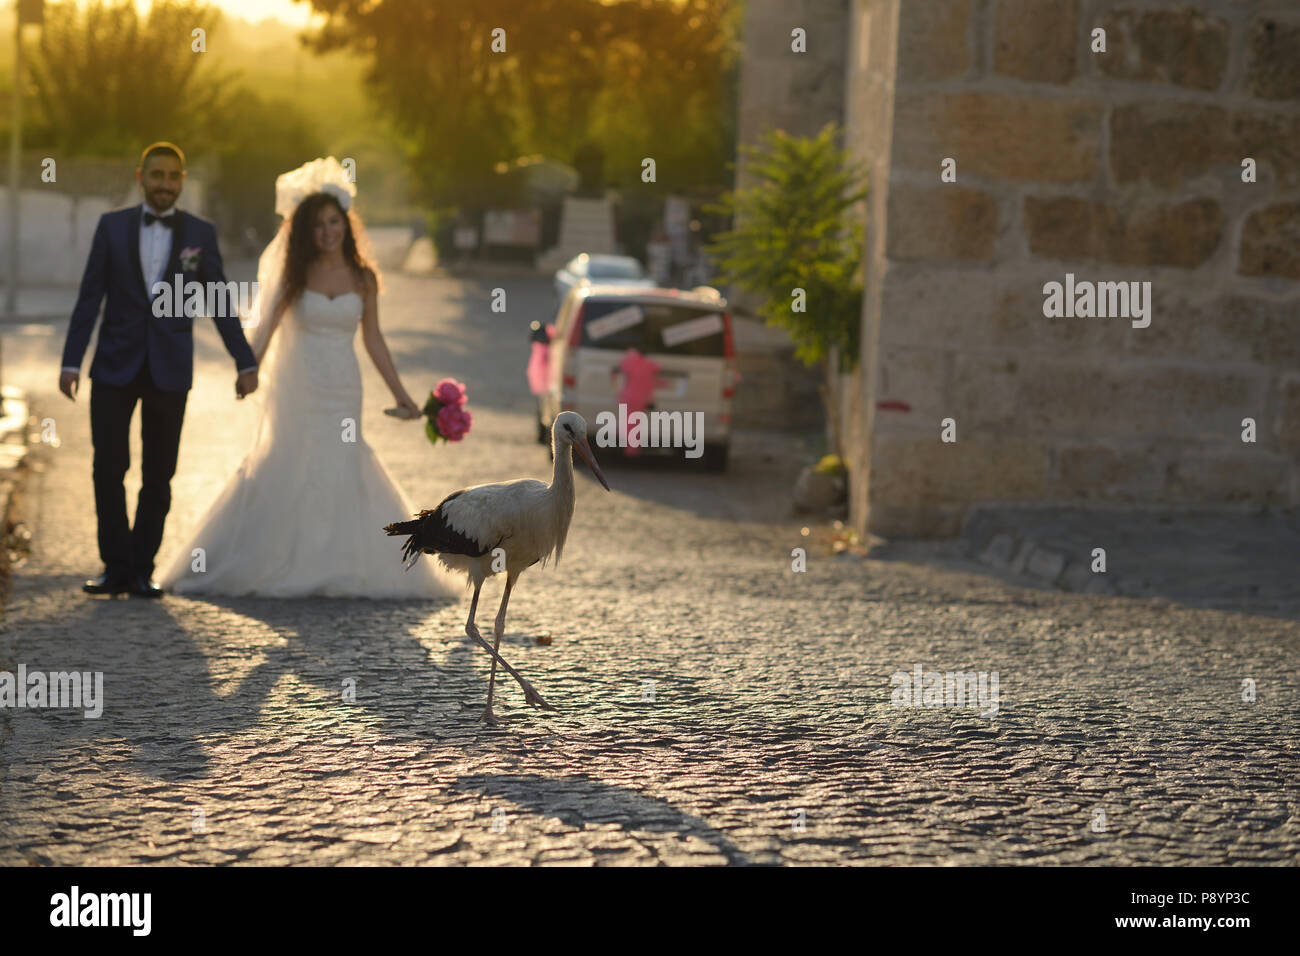 Wedding bride and groom stork bridegroom funny wedding photo  love marriage marrying couple Stock Photo